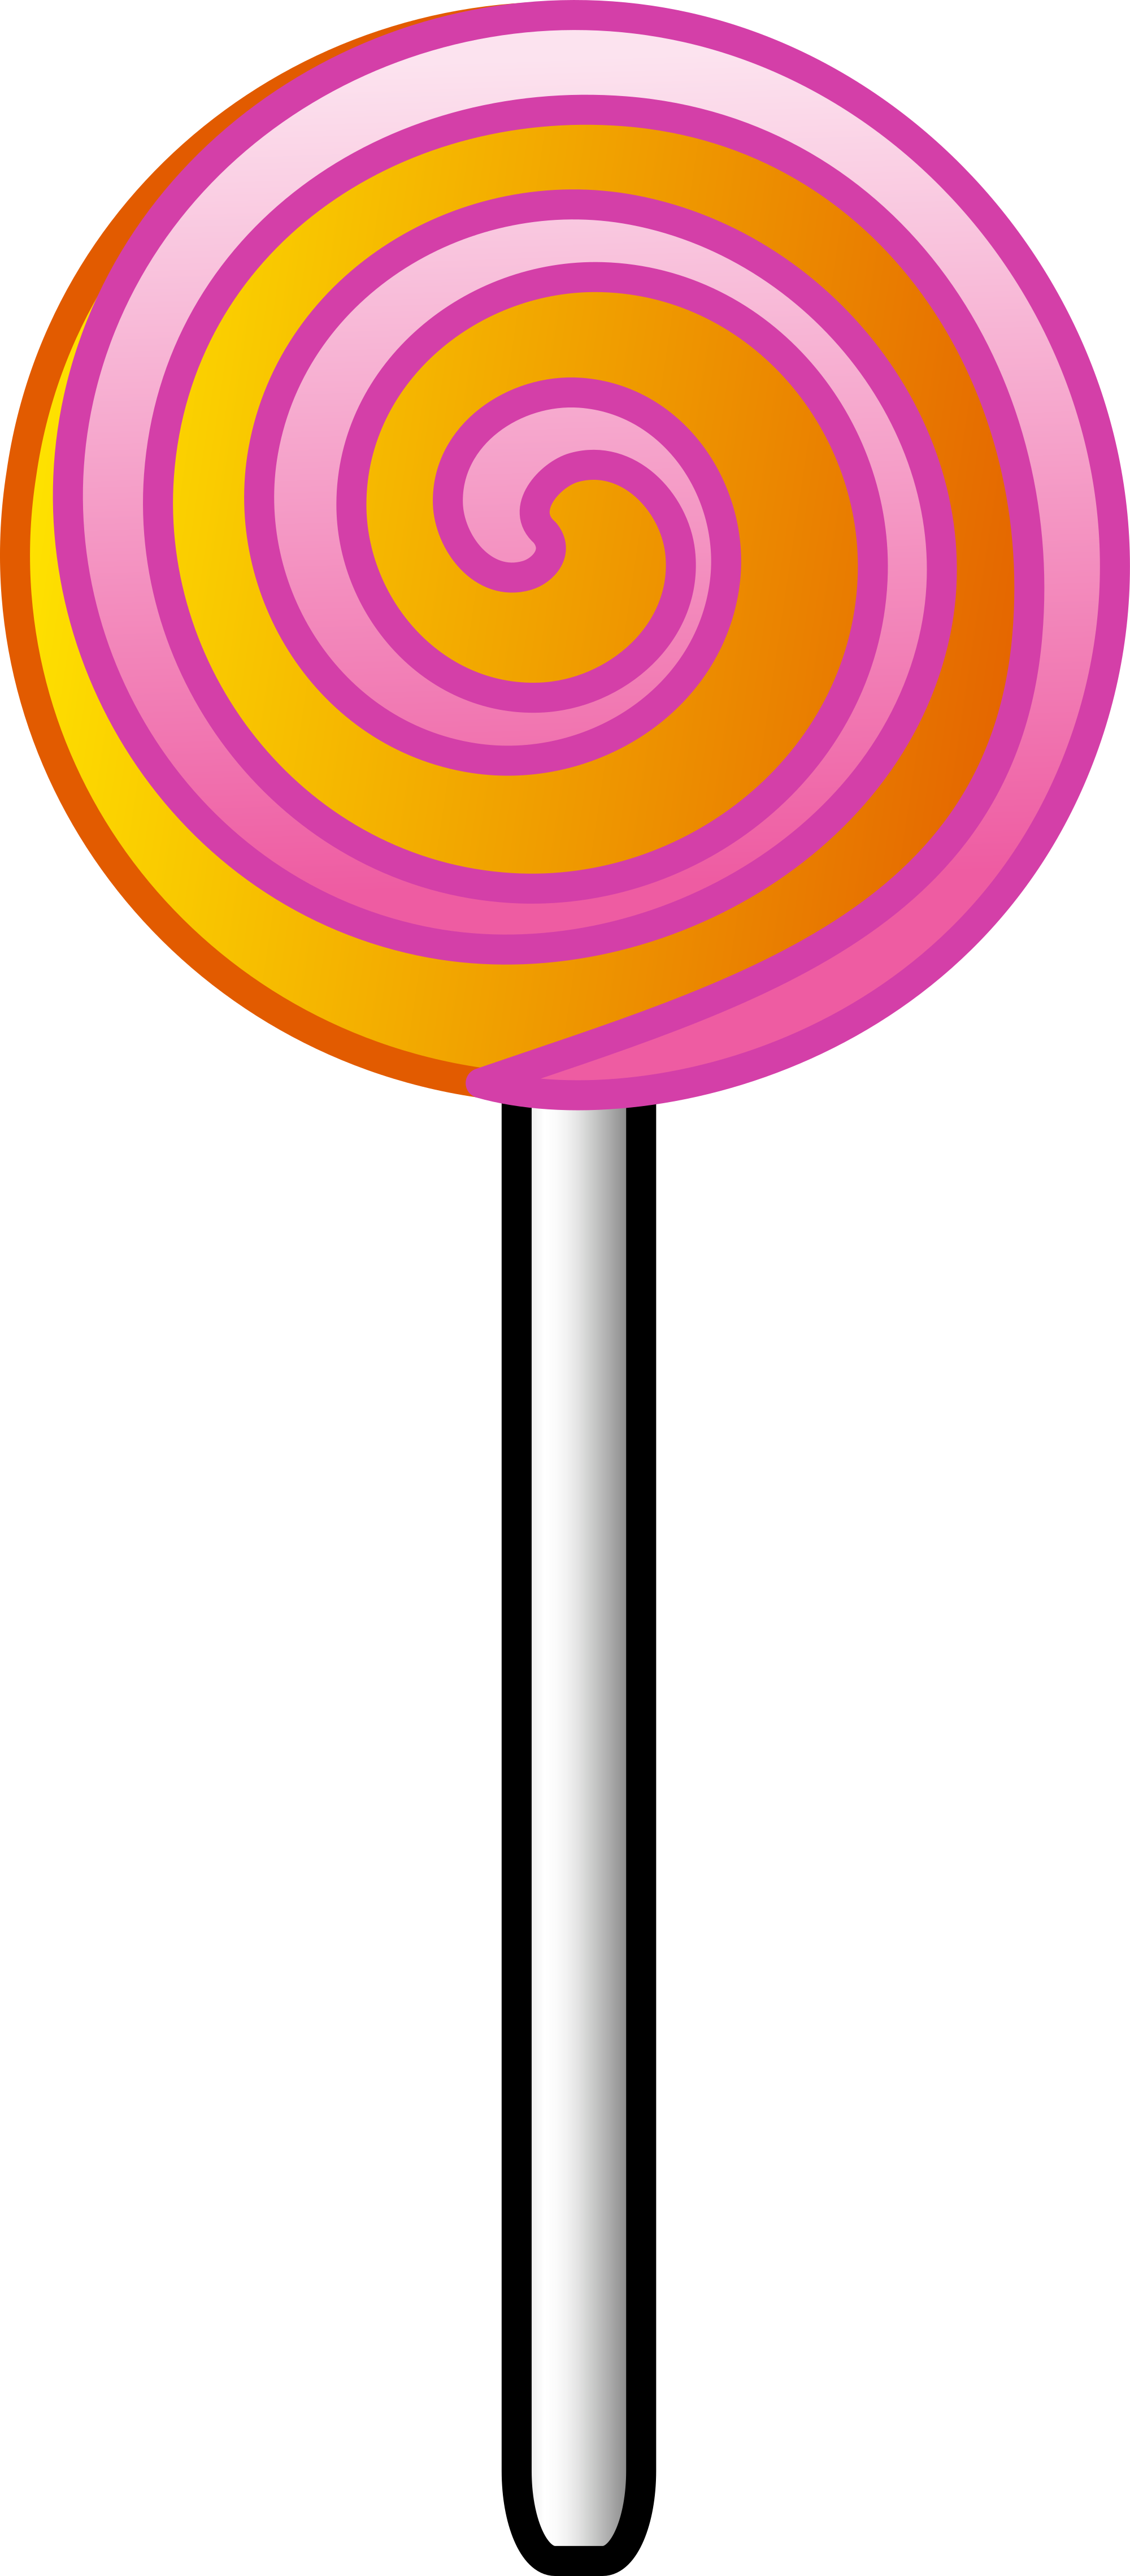 Lollipop clip art free download